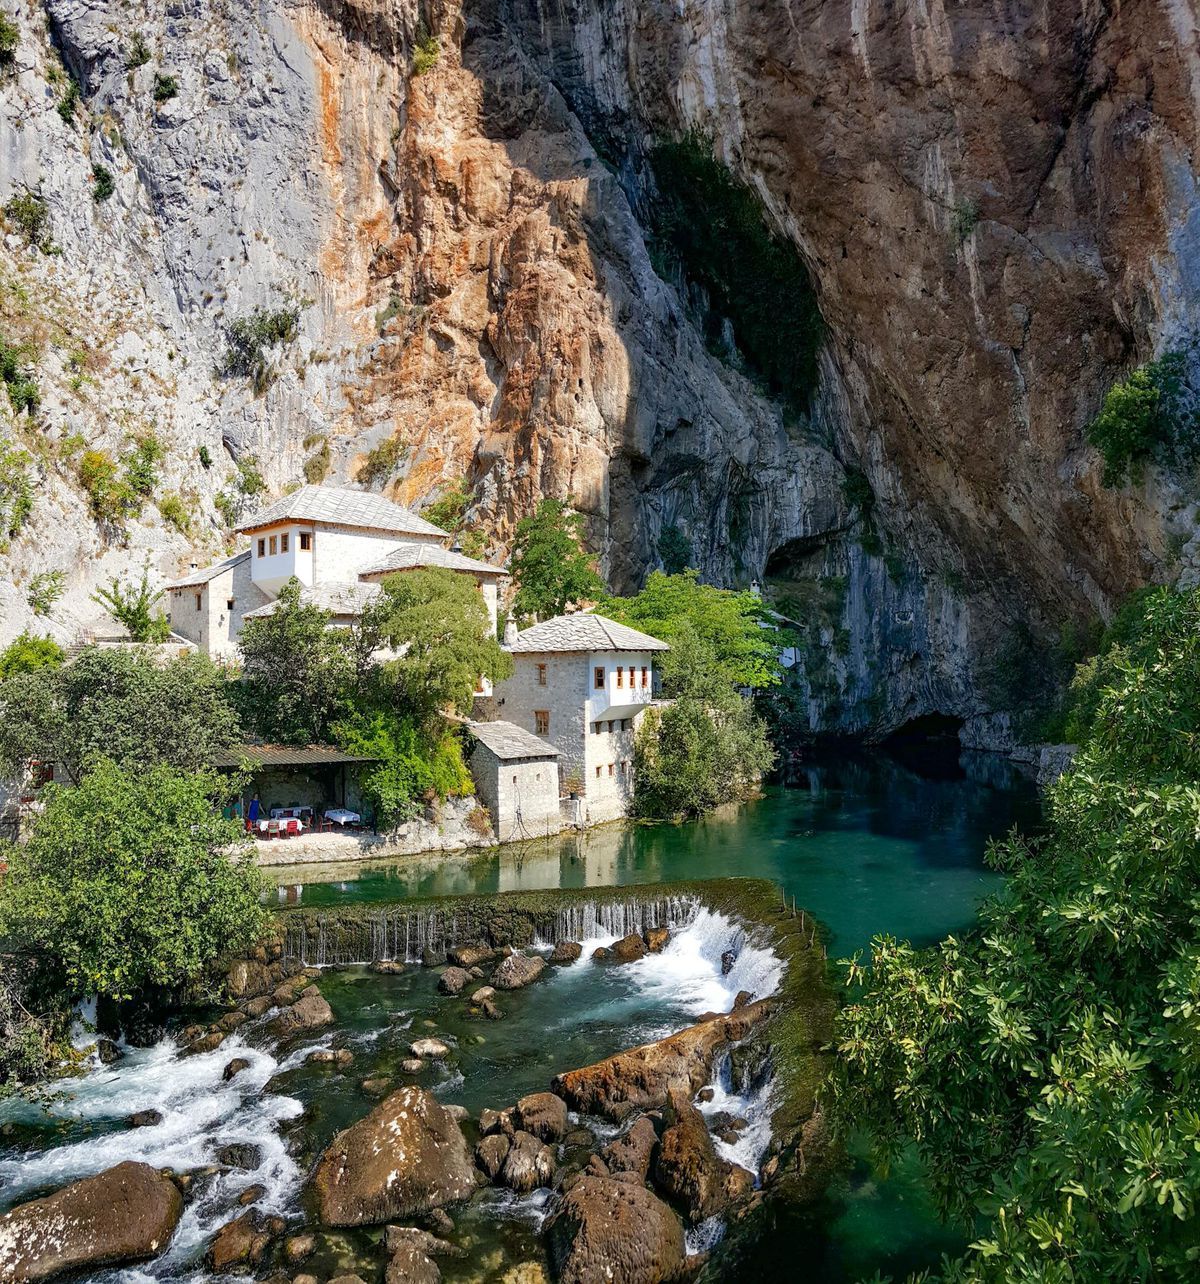 Blagaj Tekija: Bosnia's Beautiful Monastery Under A Cliff